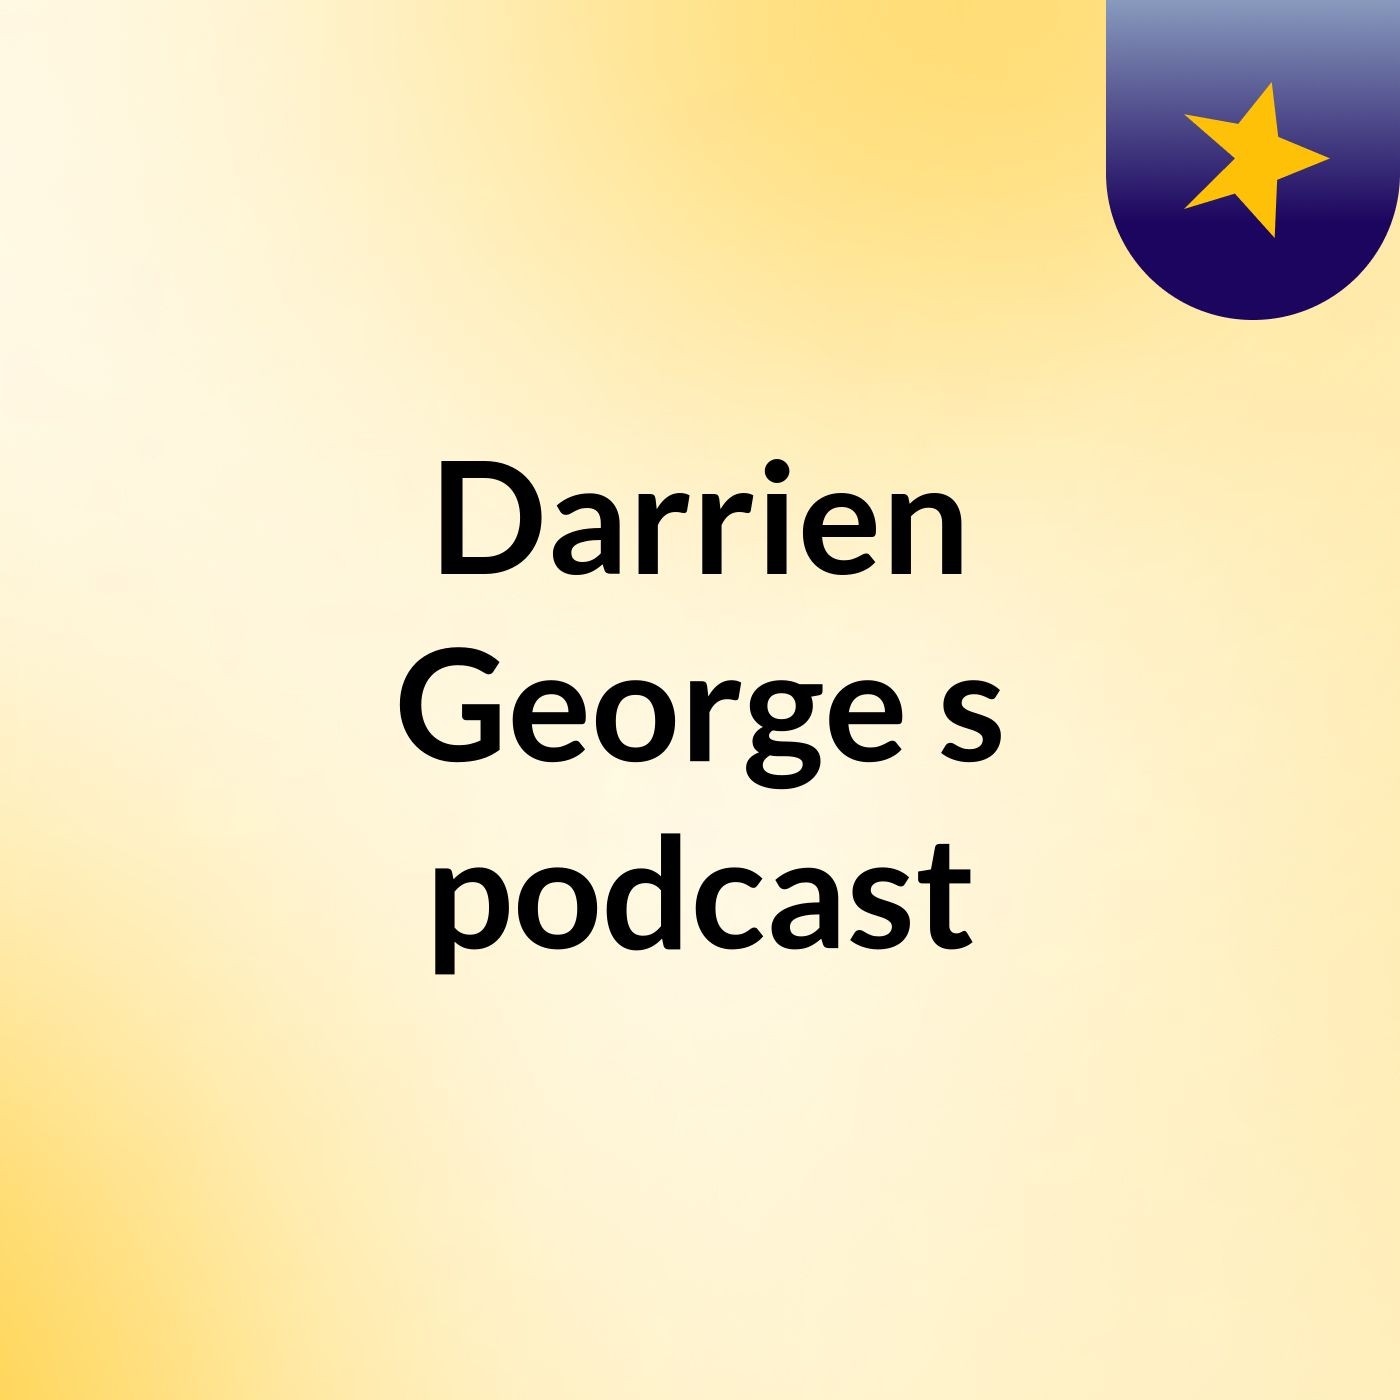 Episode 4 - Darrien George's podcast